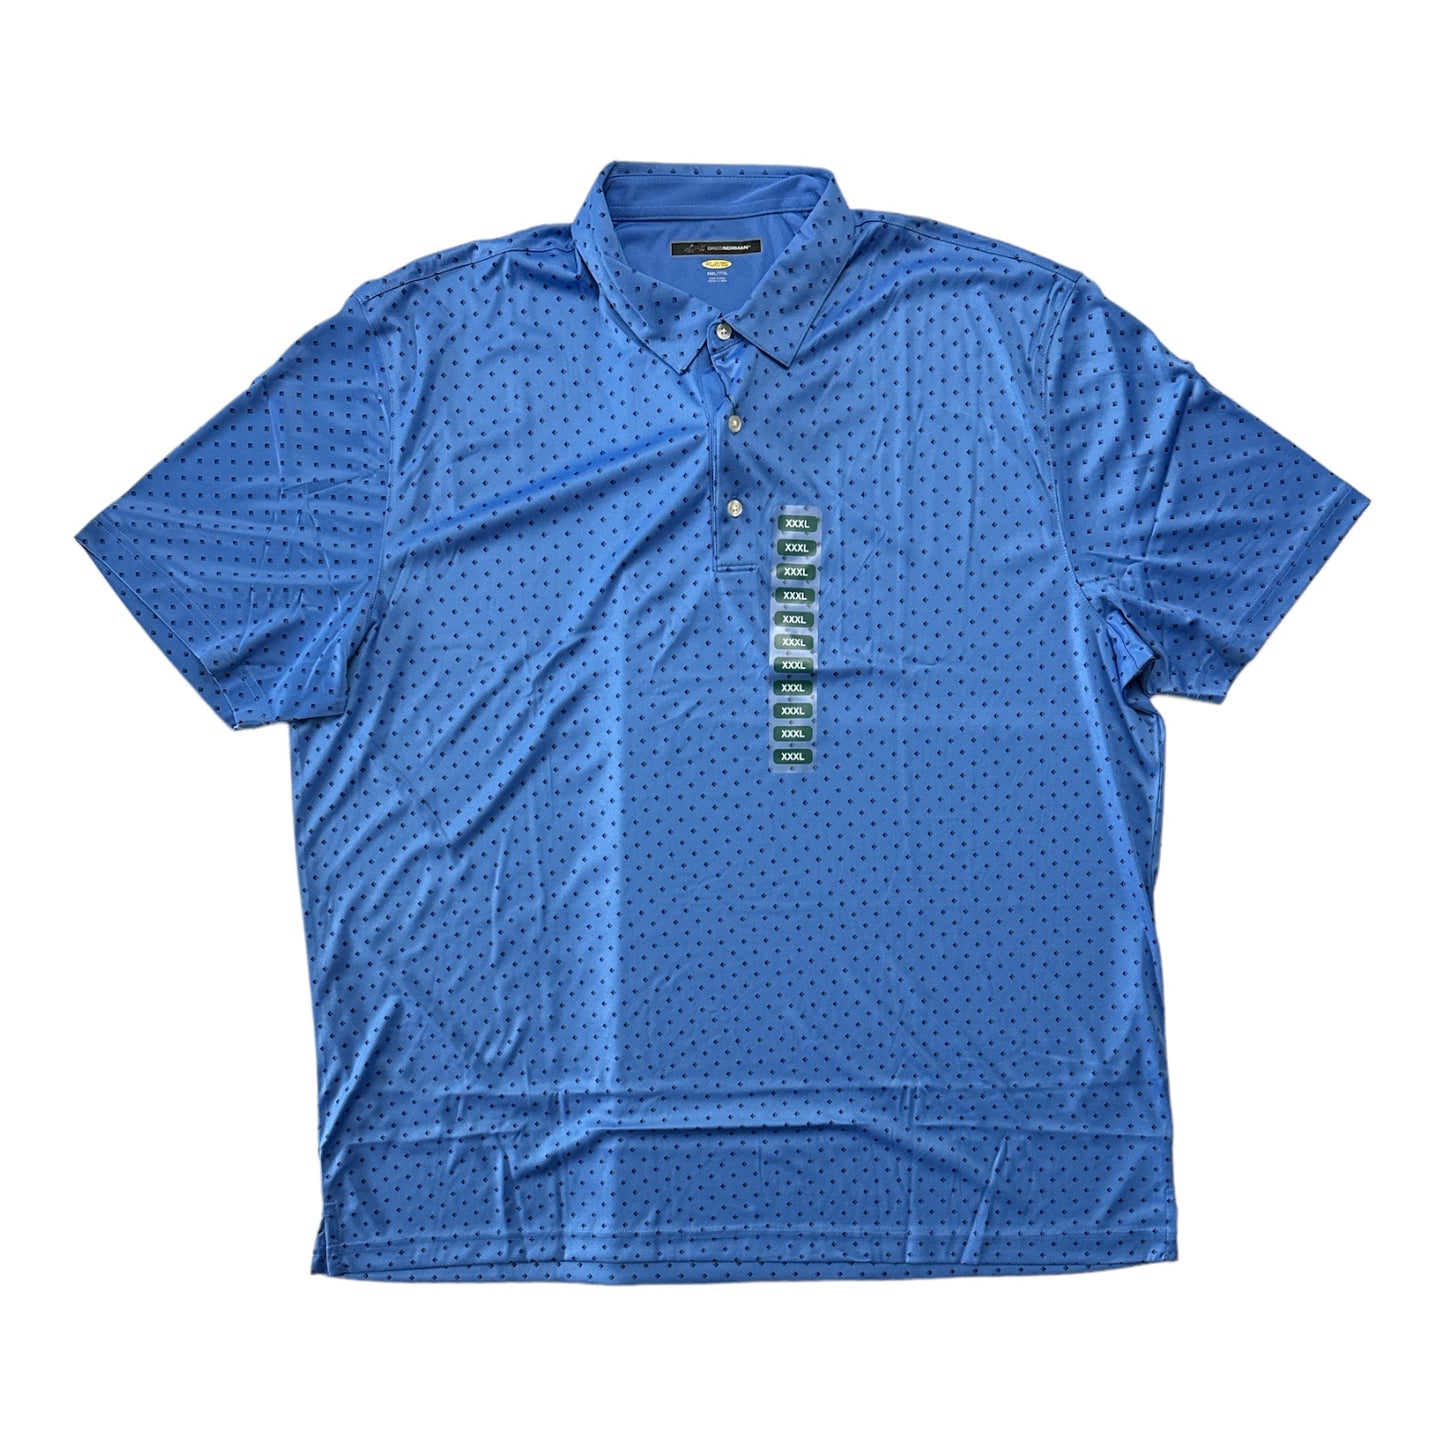 Greg Norman Men's Play Dry Moisture Wicking UPF 30+ Short Sleeve Polo Shirt